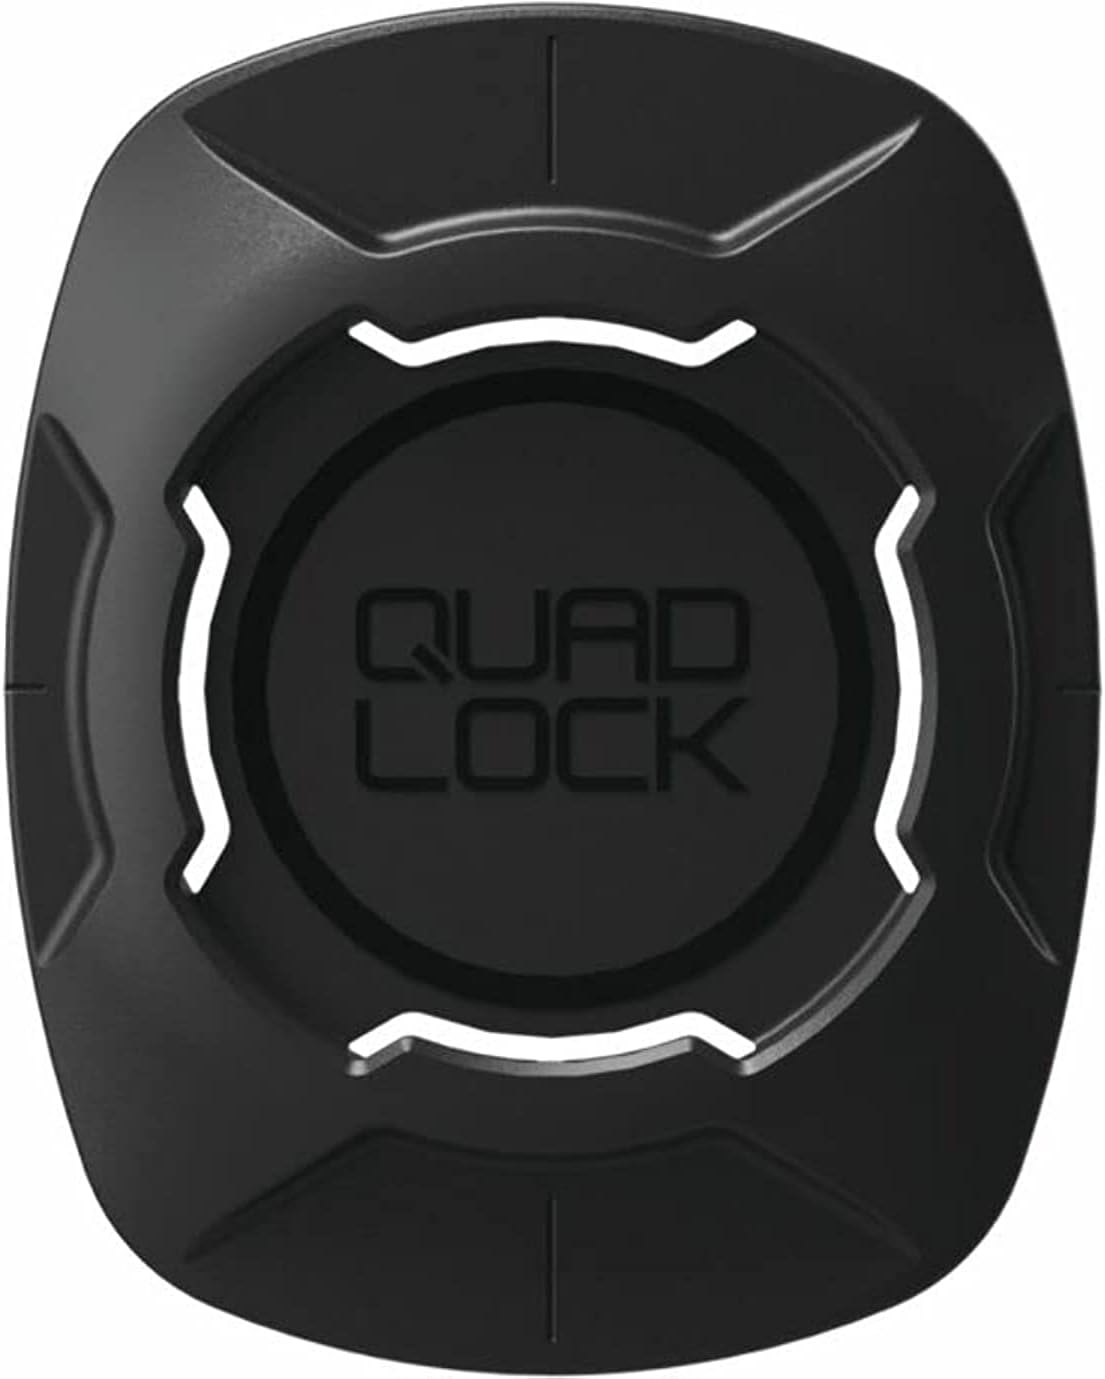 Quad Lock Universal Adapter